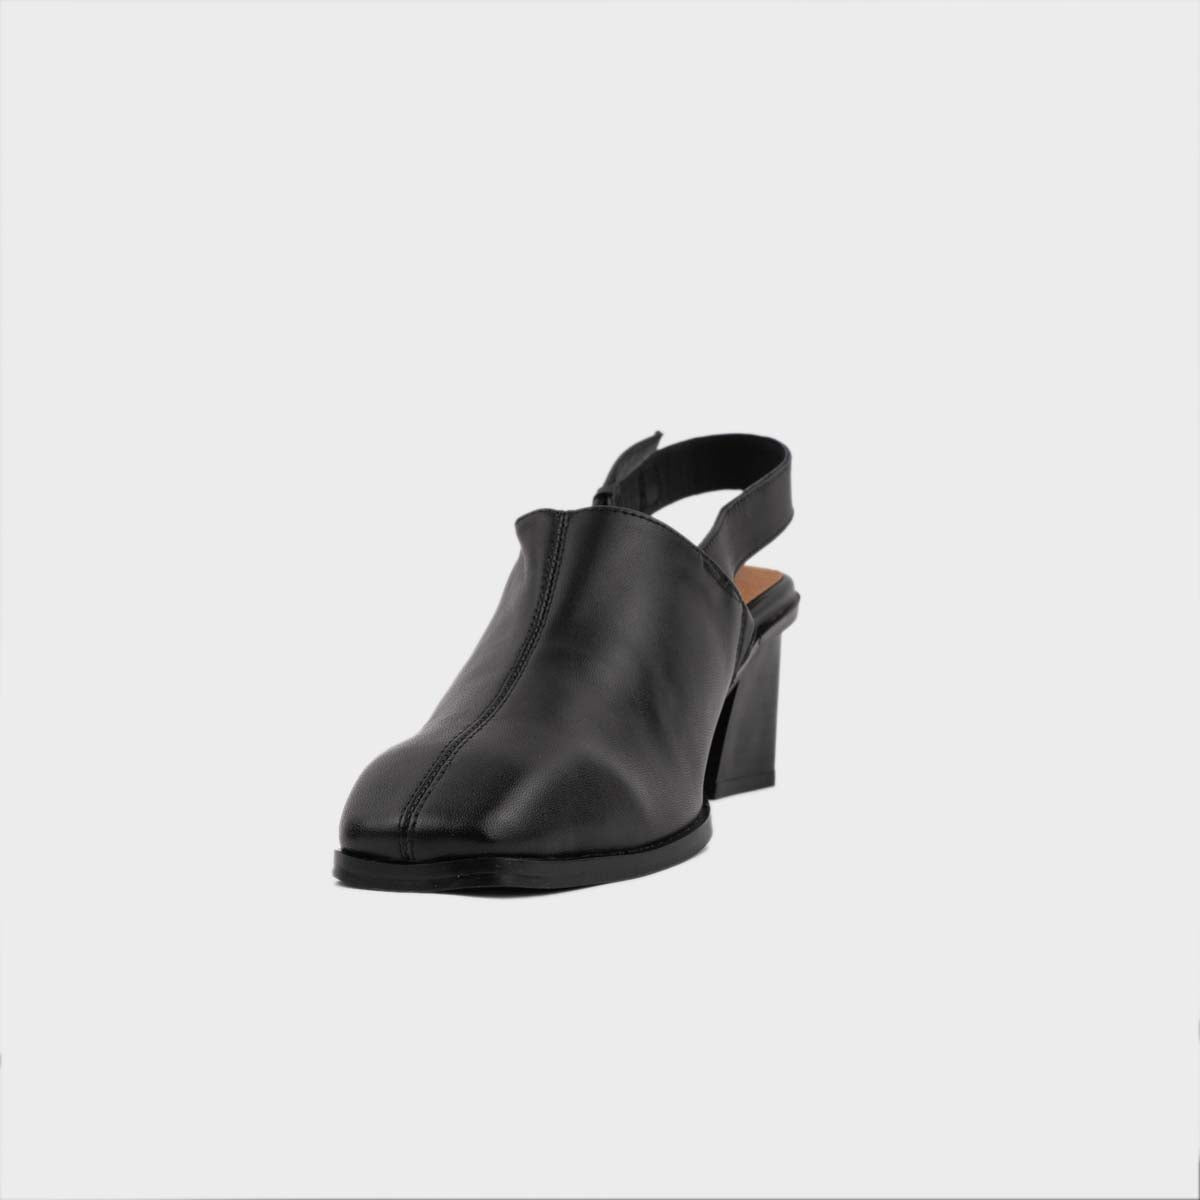 Giày Cao Gót - Laure Retro Heels (Đen) Mã GCG-KUMO-008